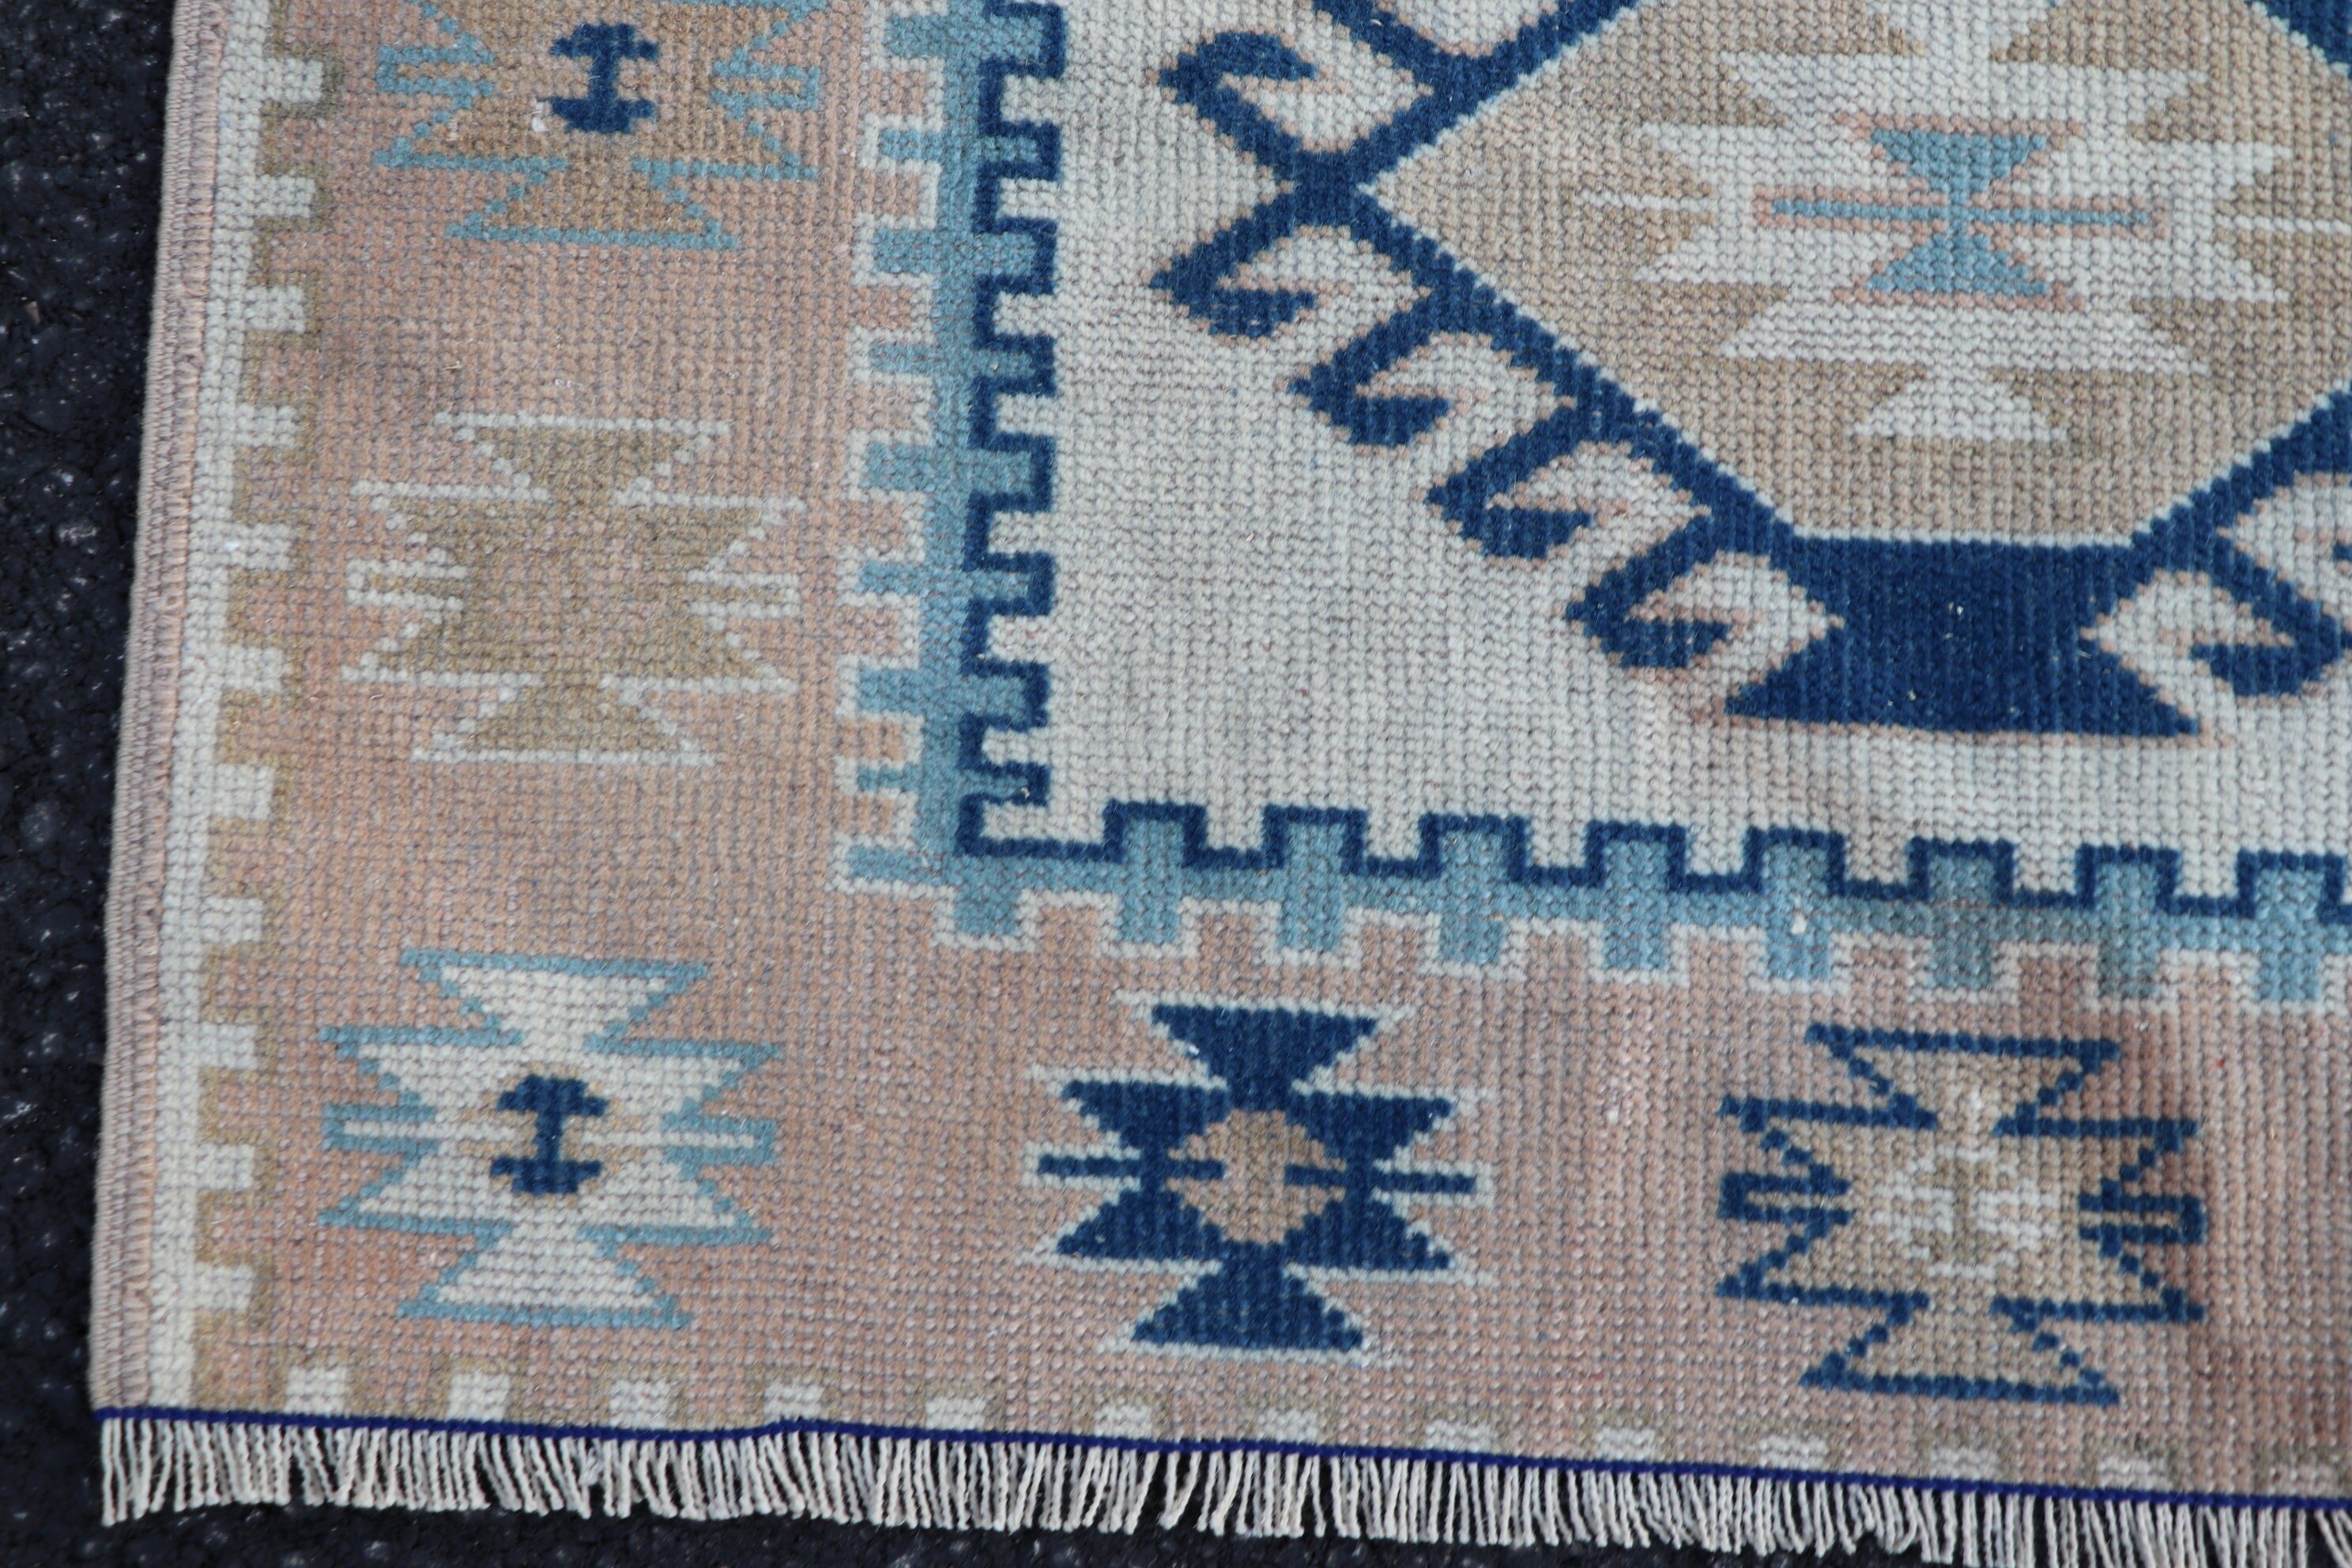 Turkish Rug, Rugs for Door Mat, Kitchen Rug, Vintage Rugs, Floor Rugs, 3.2x4.4 ft Small Rug, Car Mat Rugs, Pink Moroccan Rugs, Antique Rug